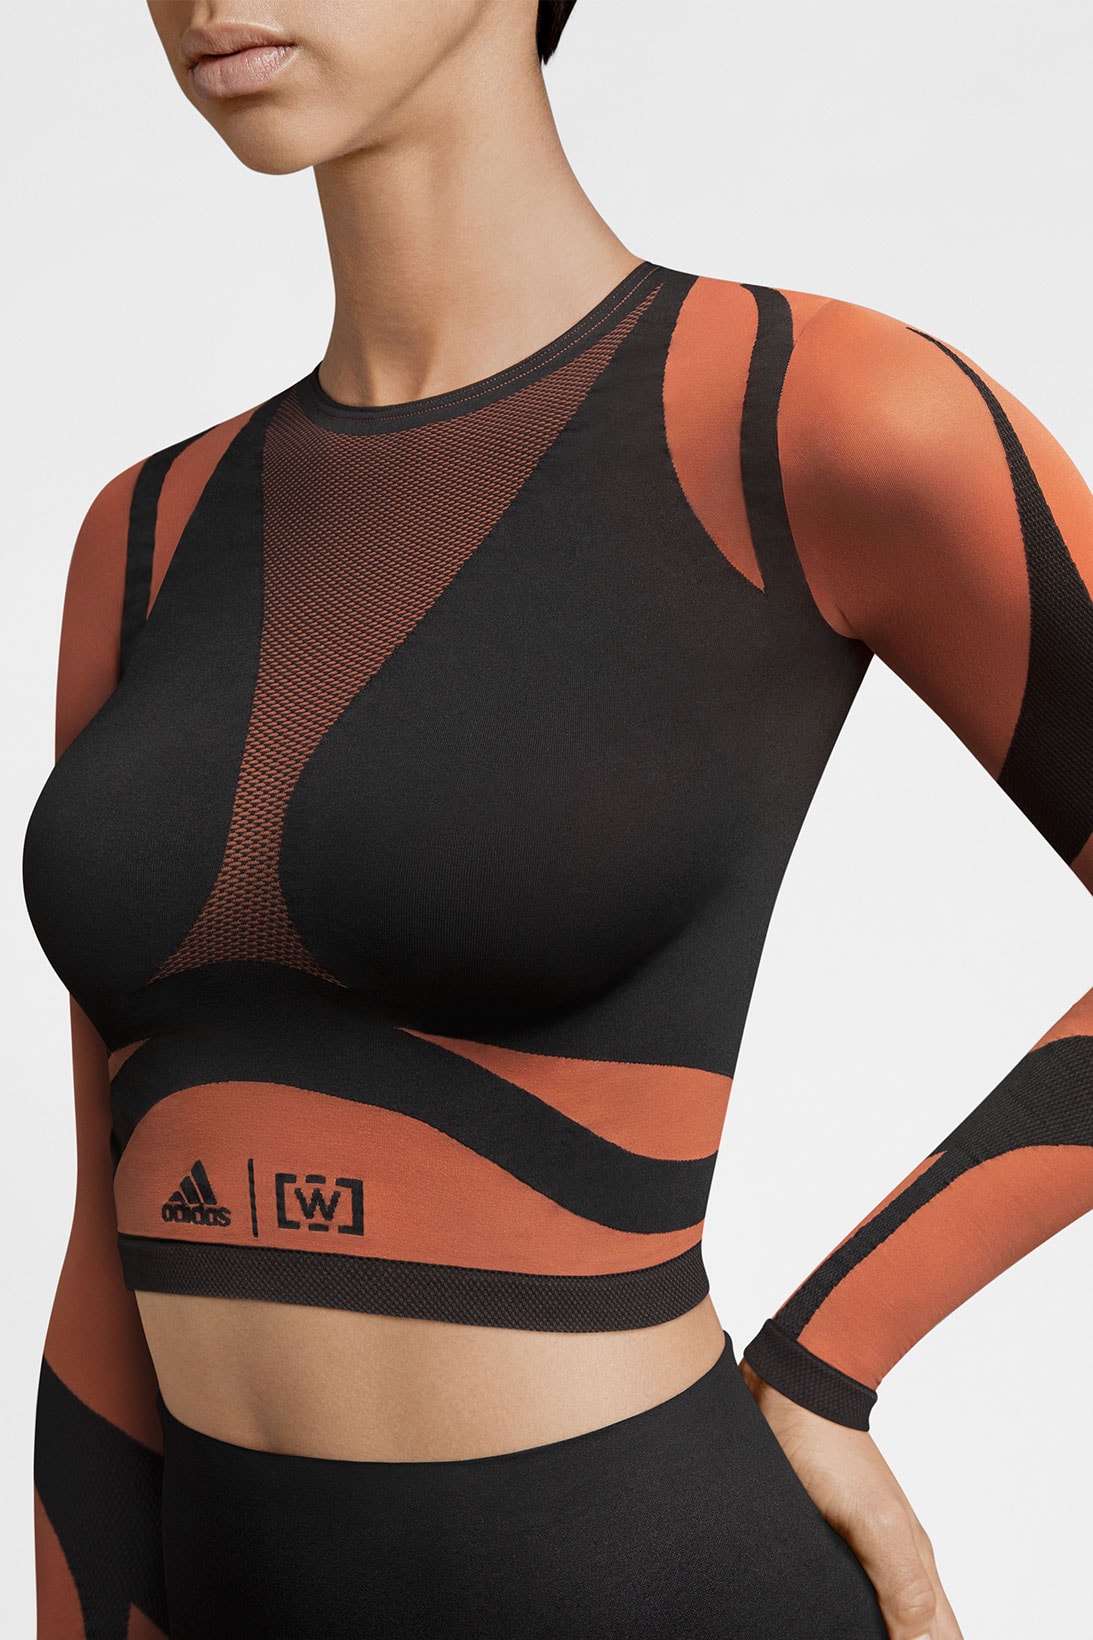 wolford adidas activewear performance collaboration seamless sheer motion crop top long sleeved orange black